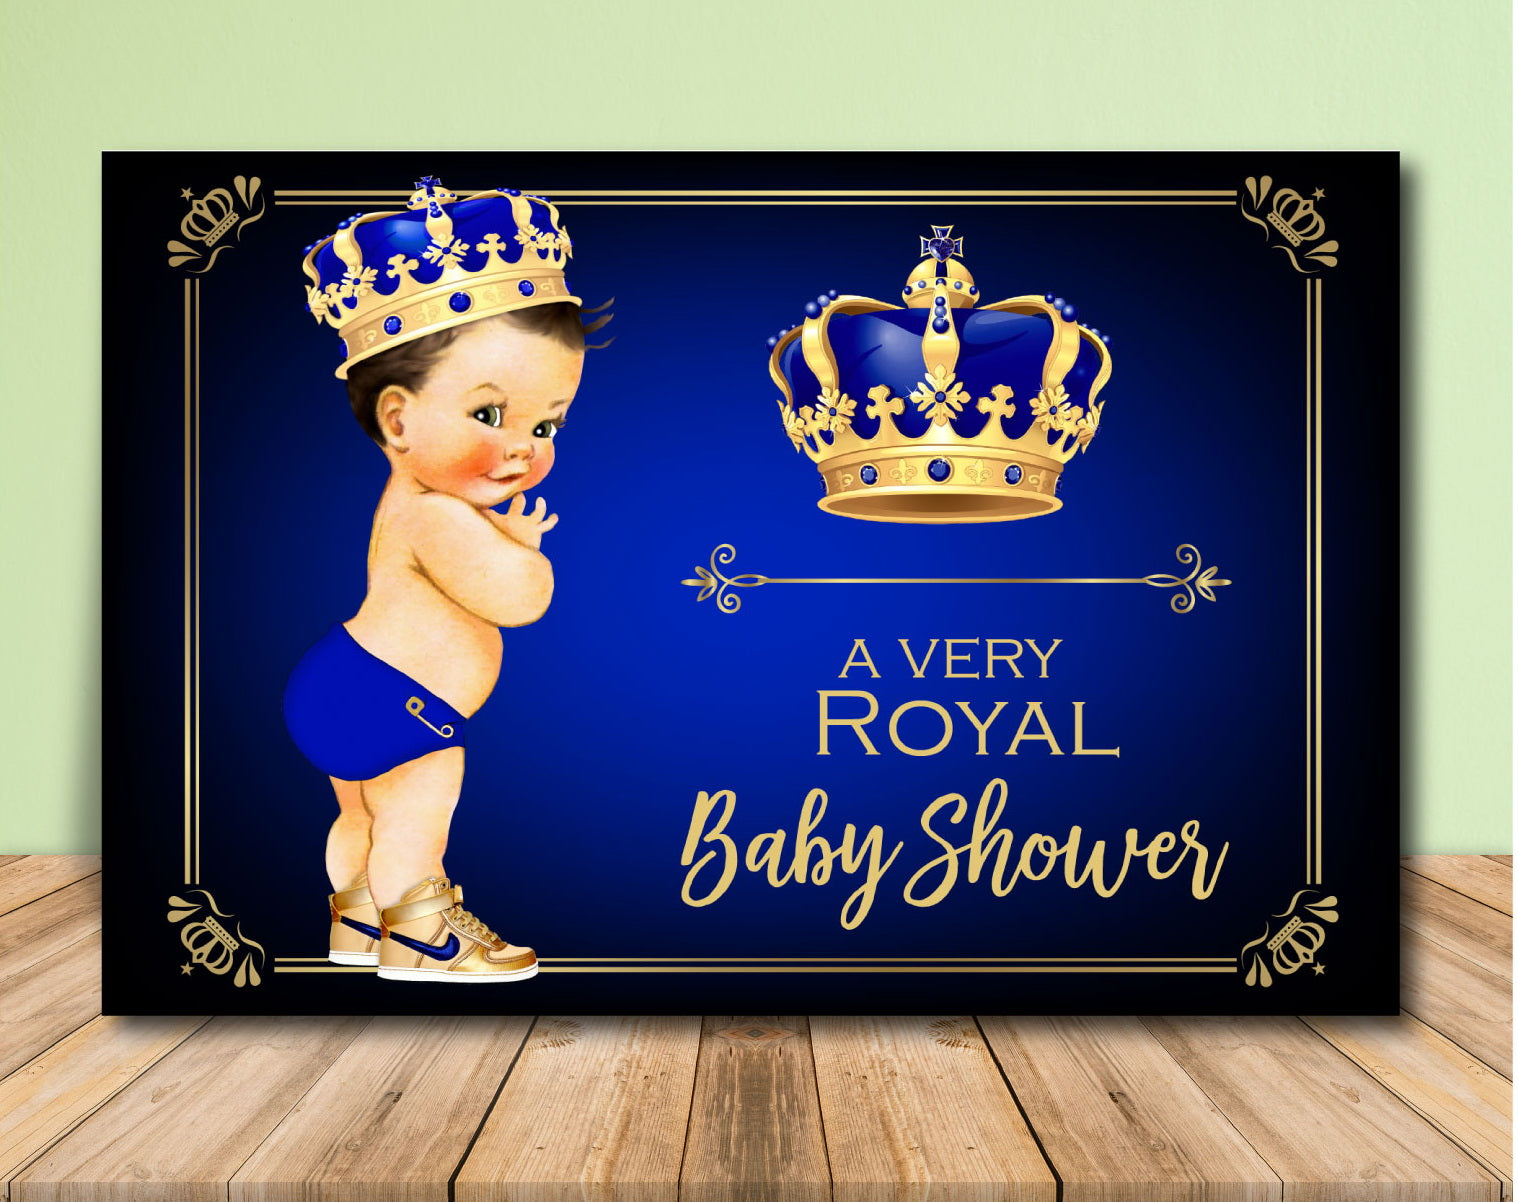 Royal Prince Baby Shower Backdrop - Lighter